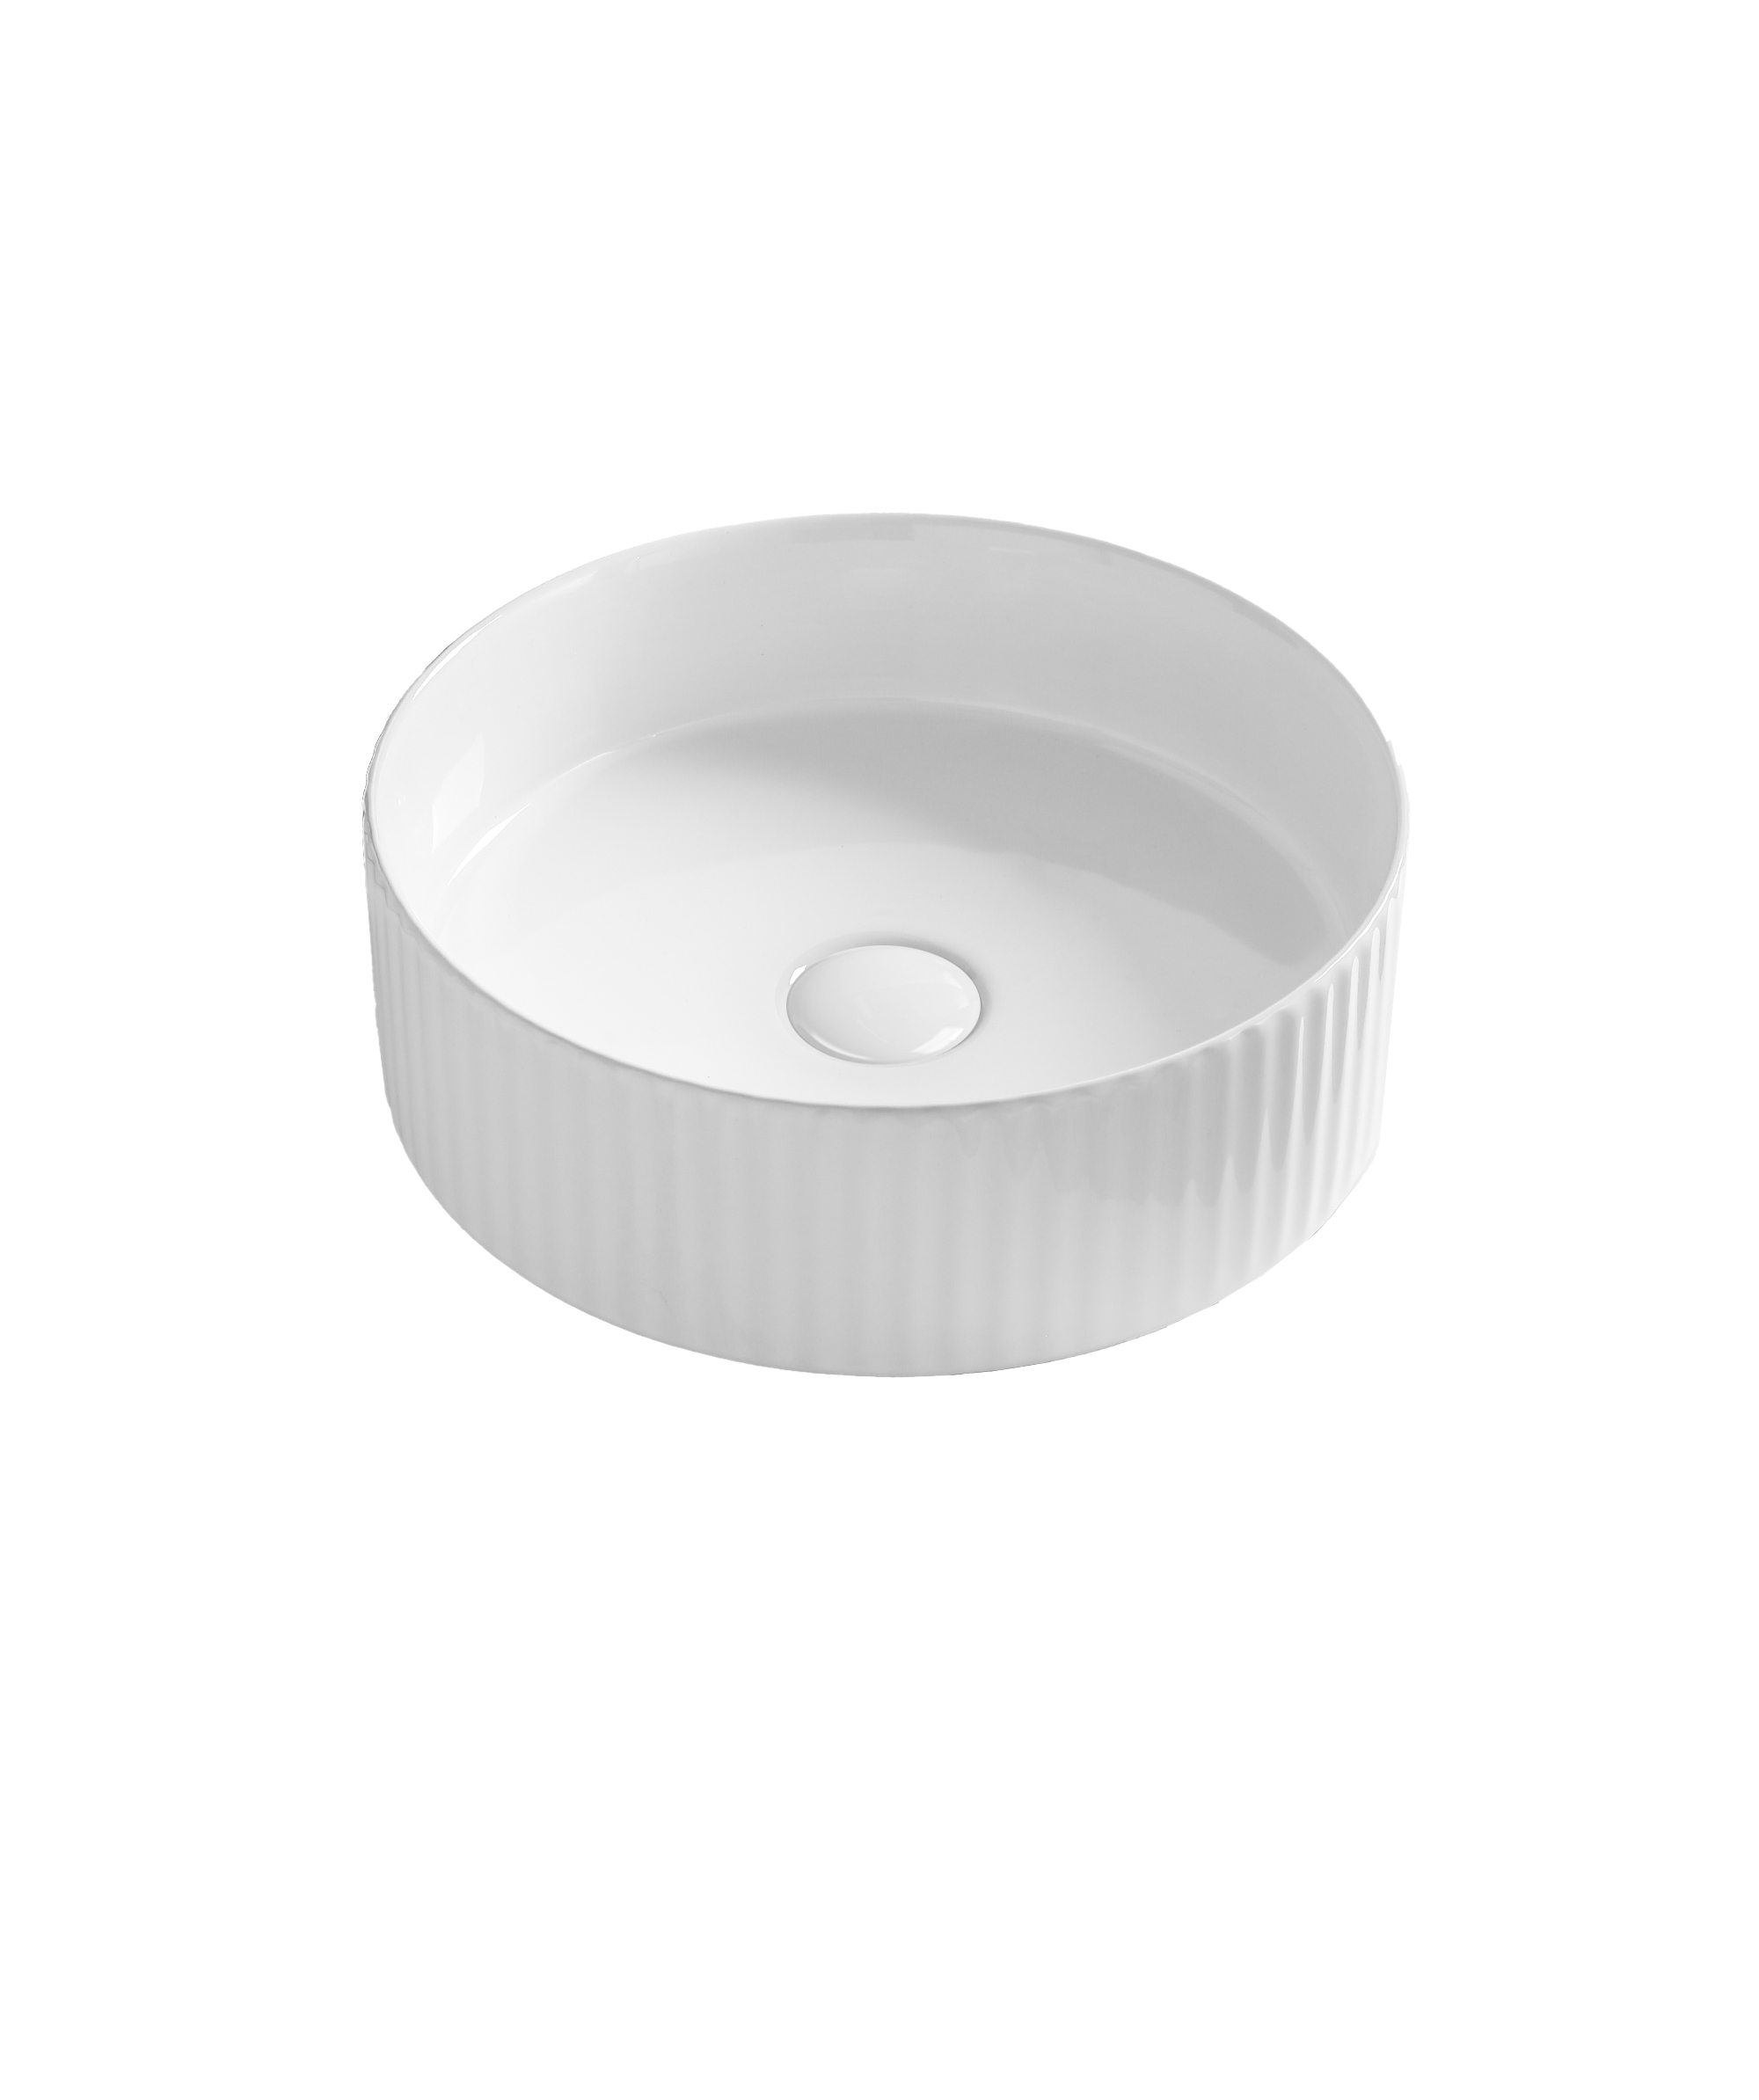 Cleo 360 ceramic basin - White Gloss